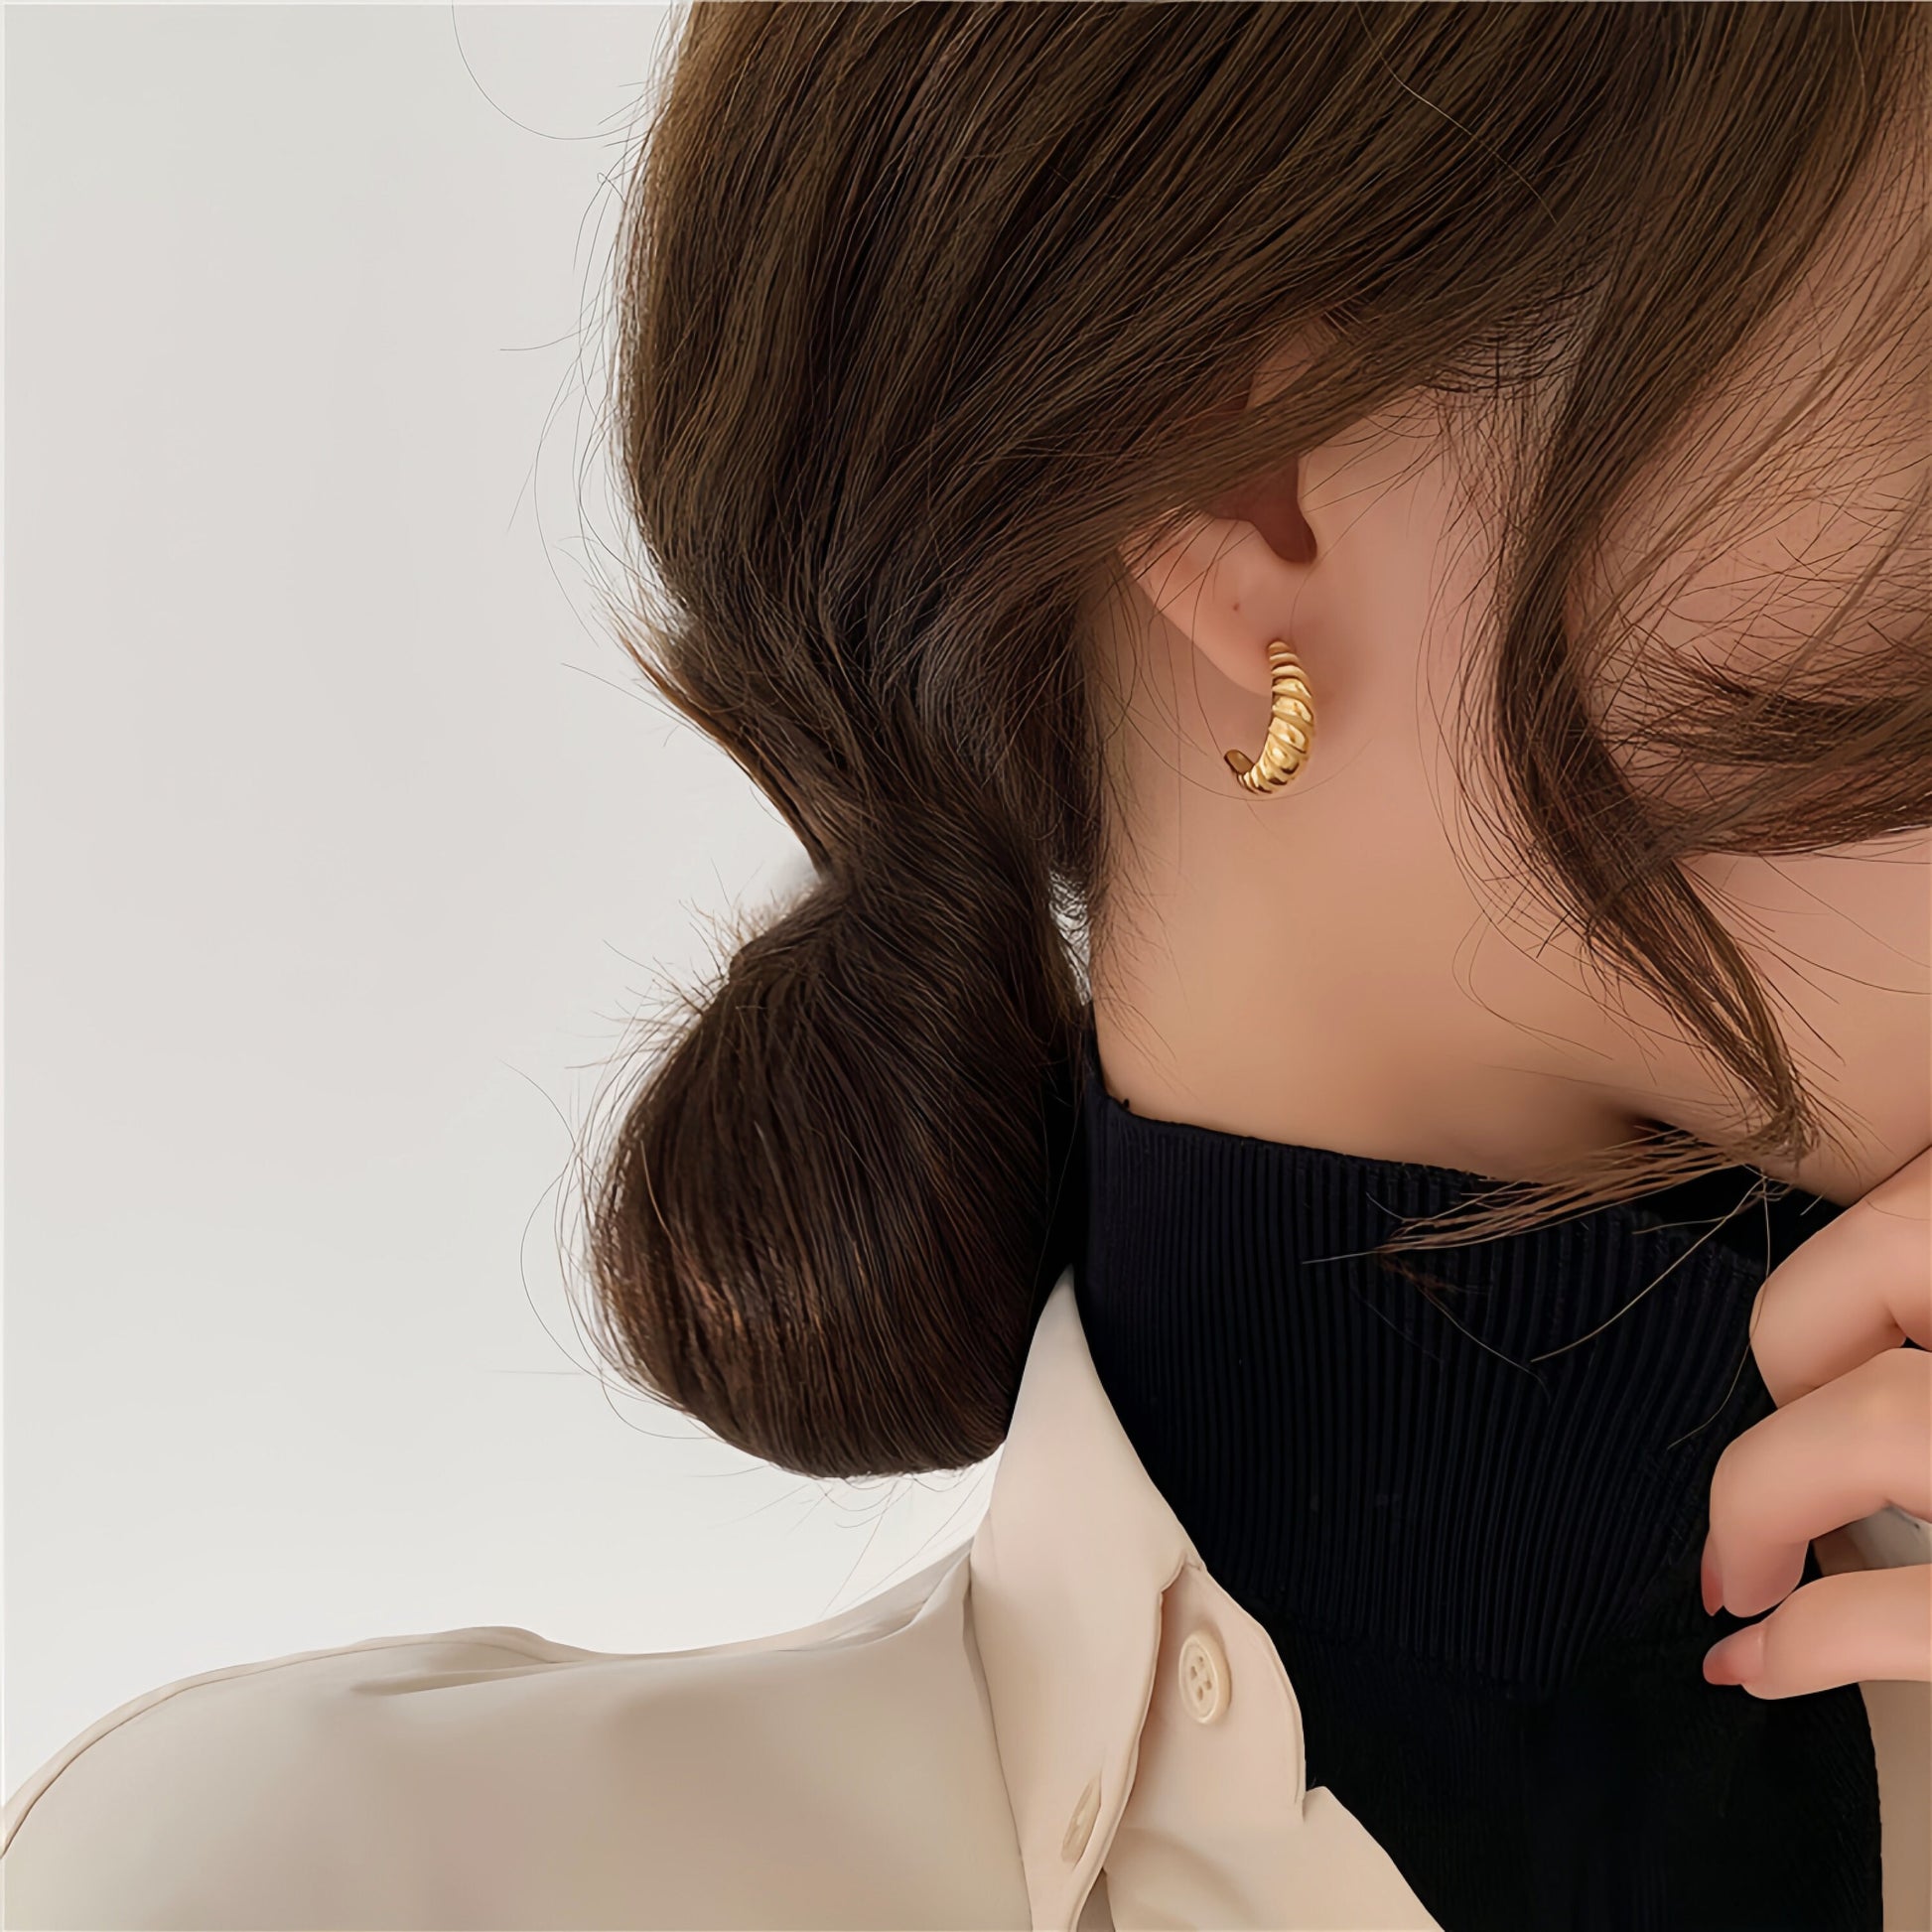 18K Gold Plated Medium Croissant Dome Stud Earrings, Statement Stud Earrings, Minimal Croissant Gold Earrings, Classic Textured Earrings